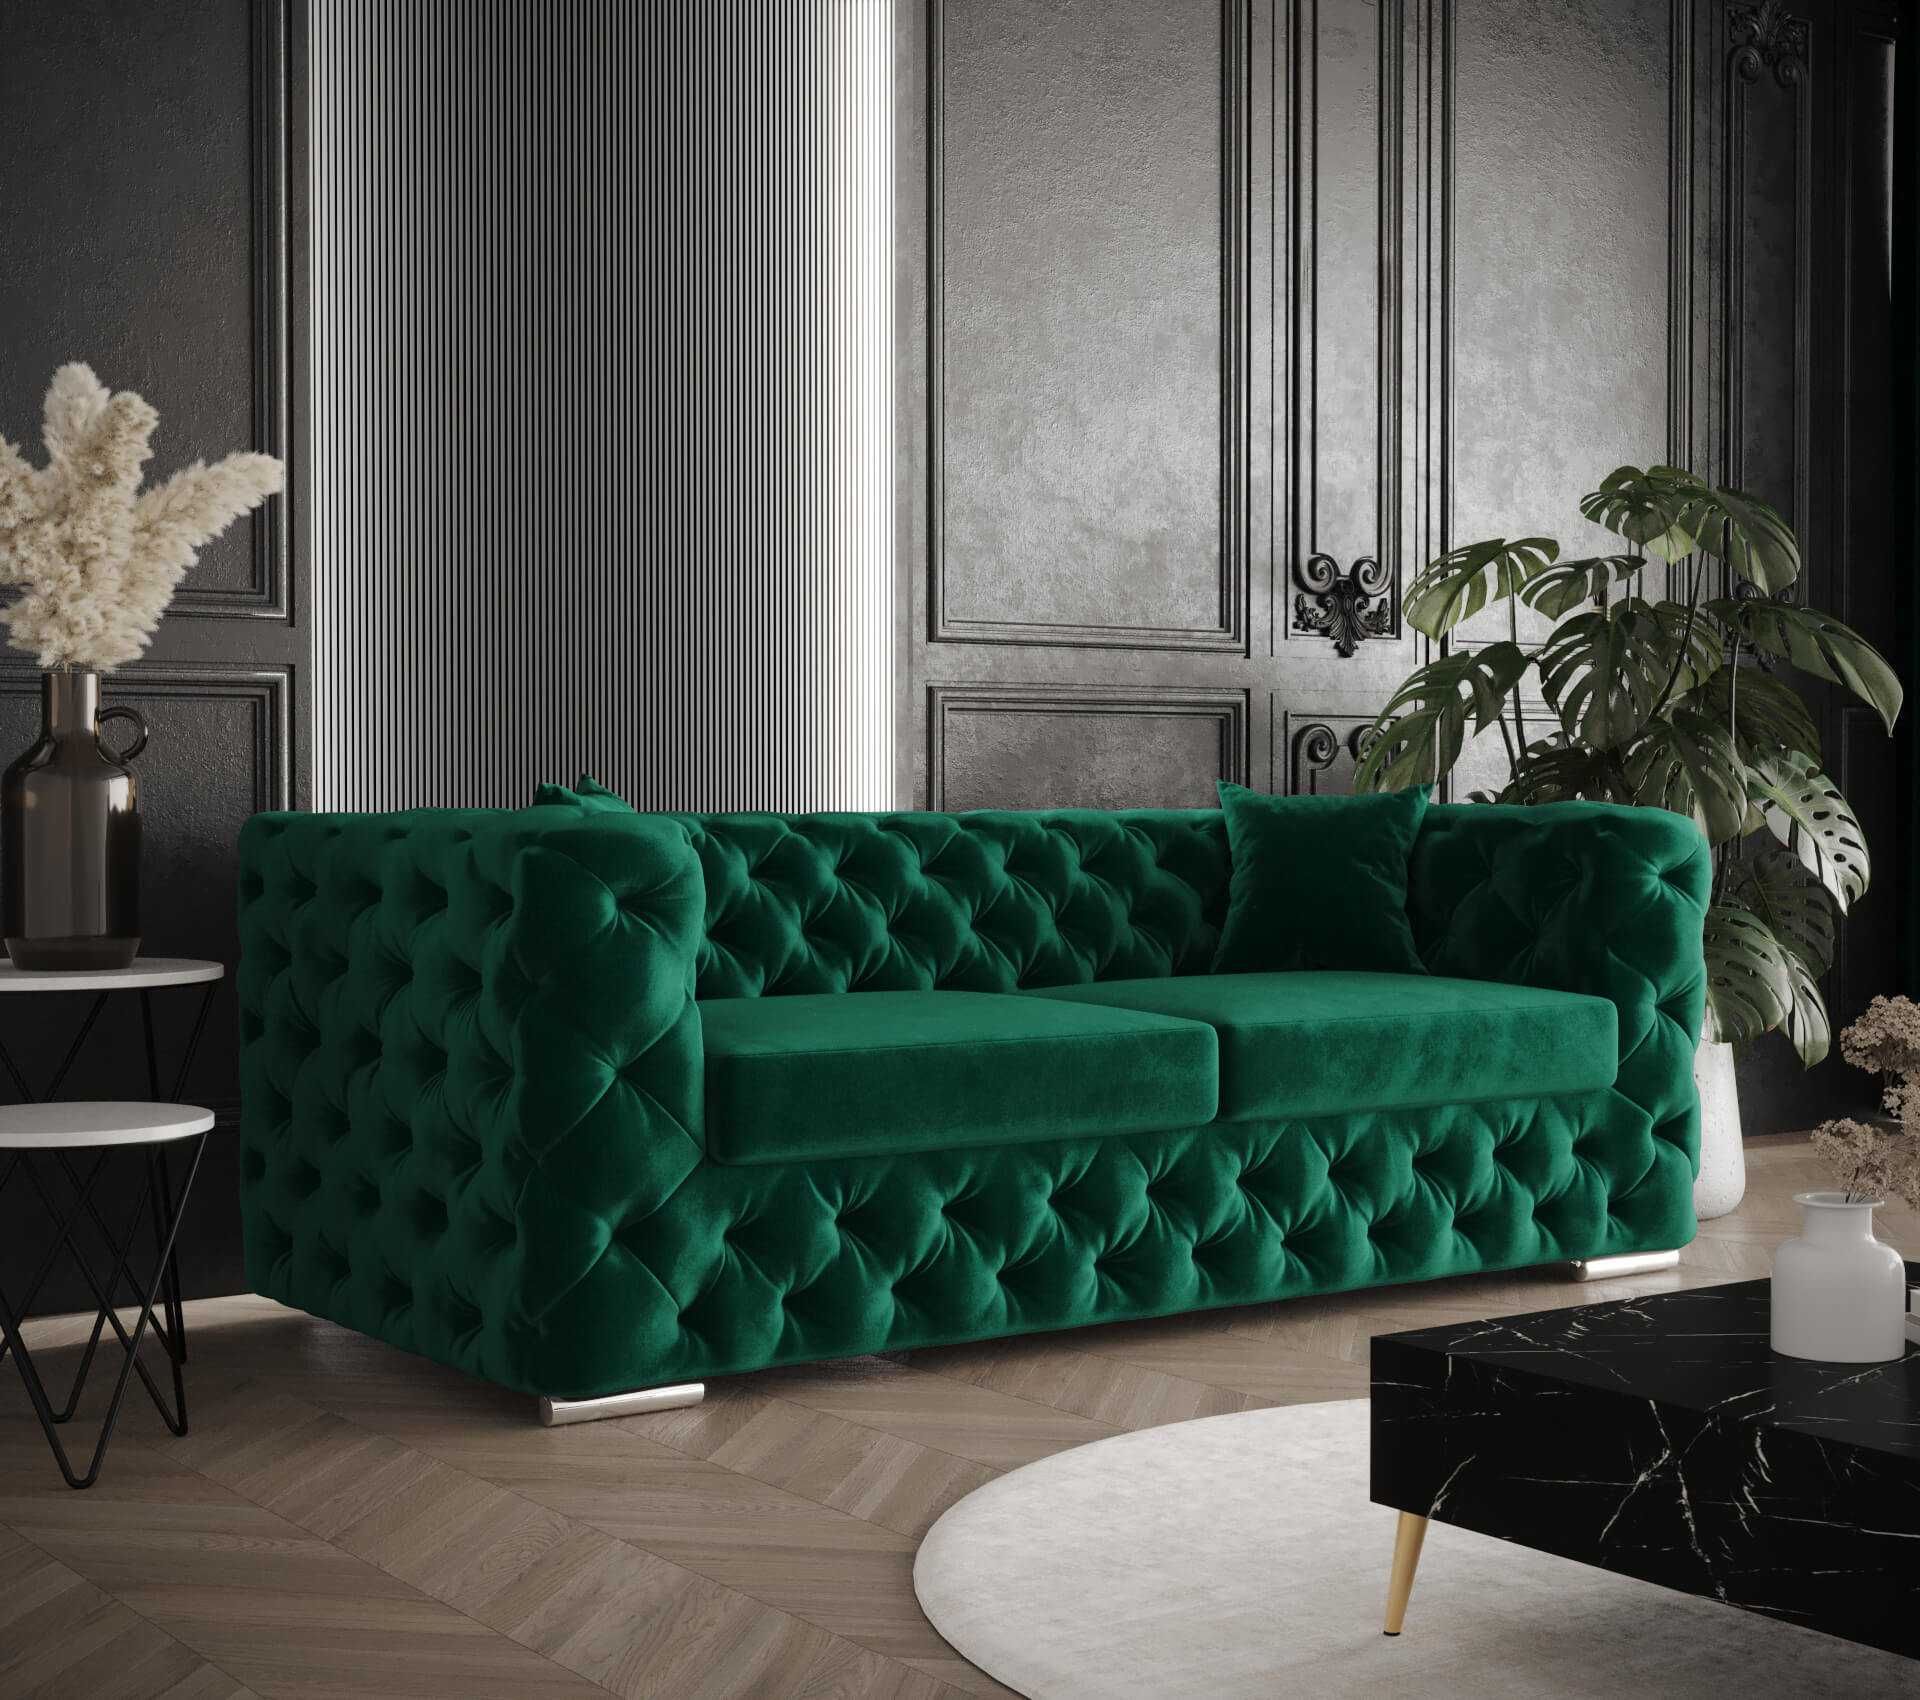 Sofa Boston Chesterfield Rozkładana Funkcja Spania Elegancka VeroLux